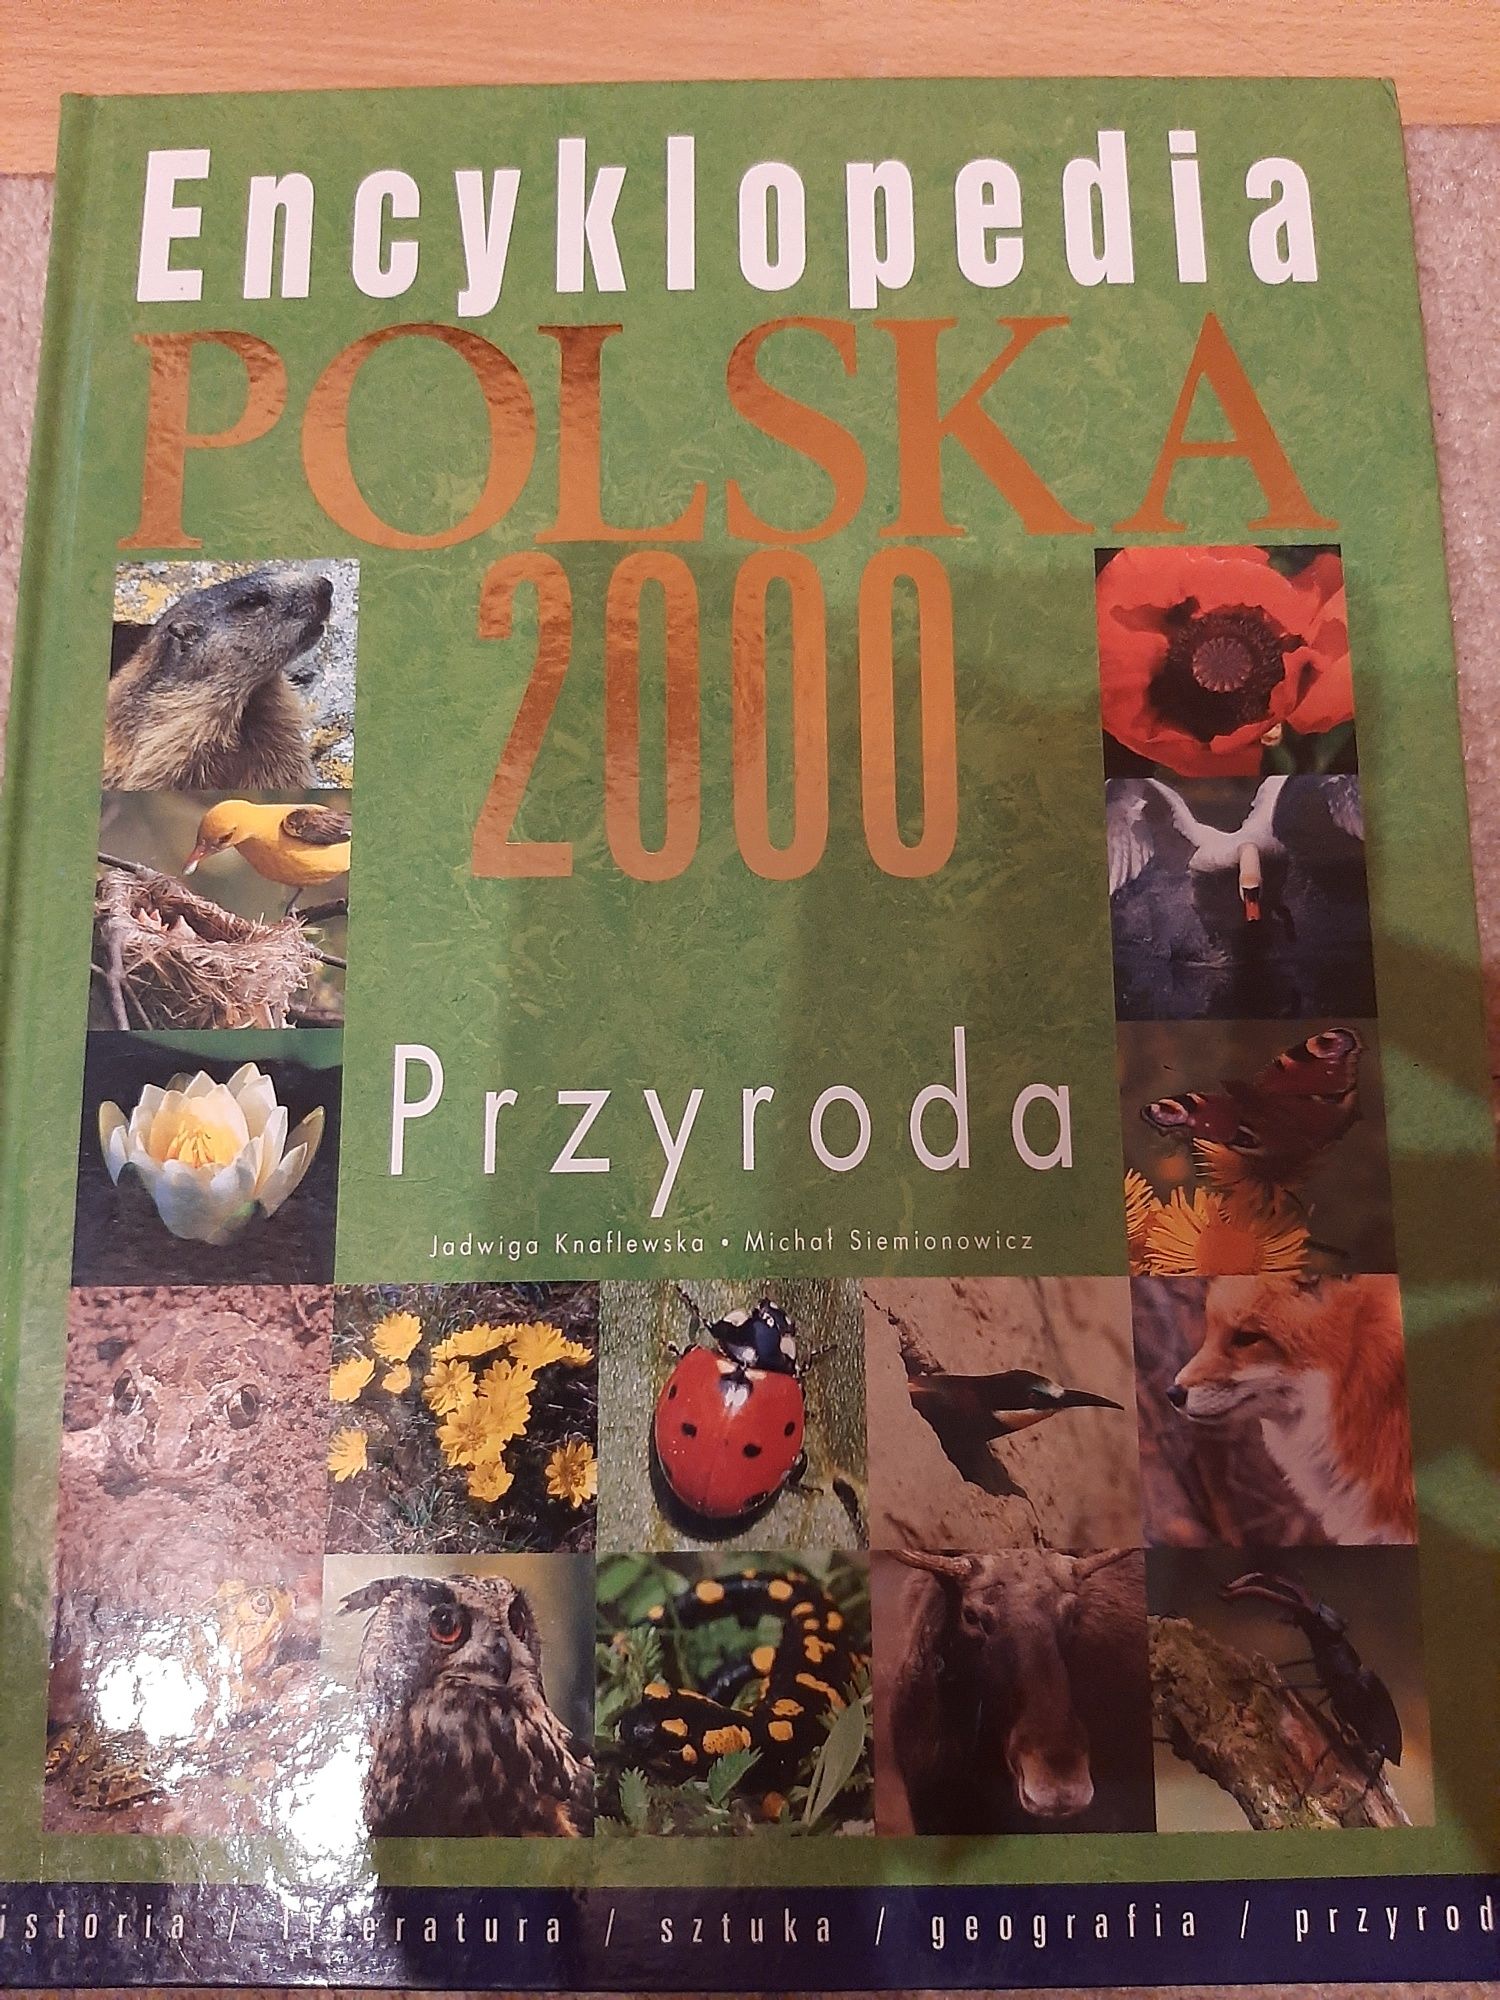 Encyklopedia Polska 2000 Przyroda